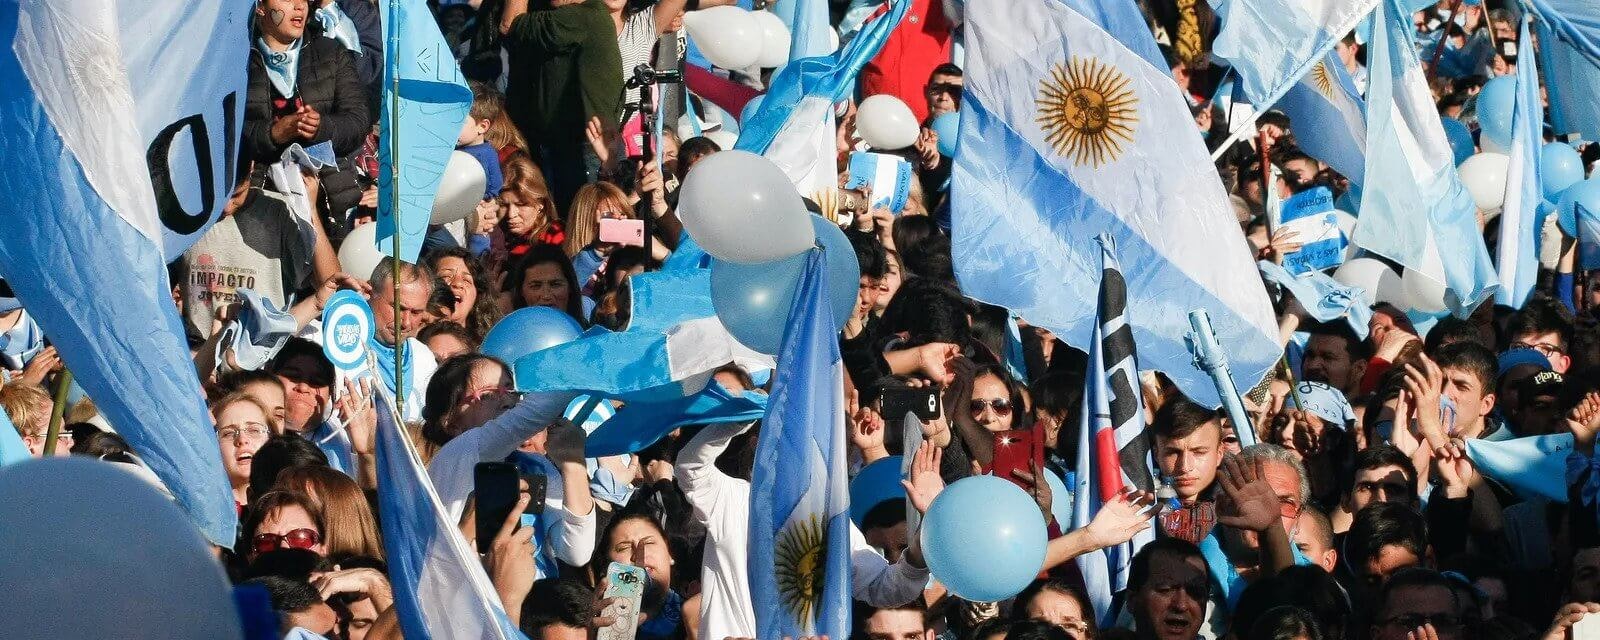 Protest in argentina